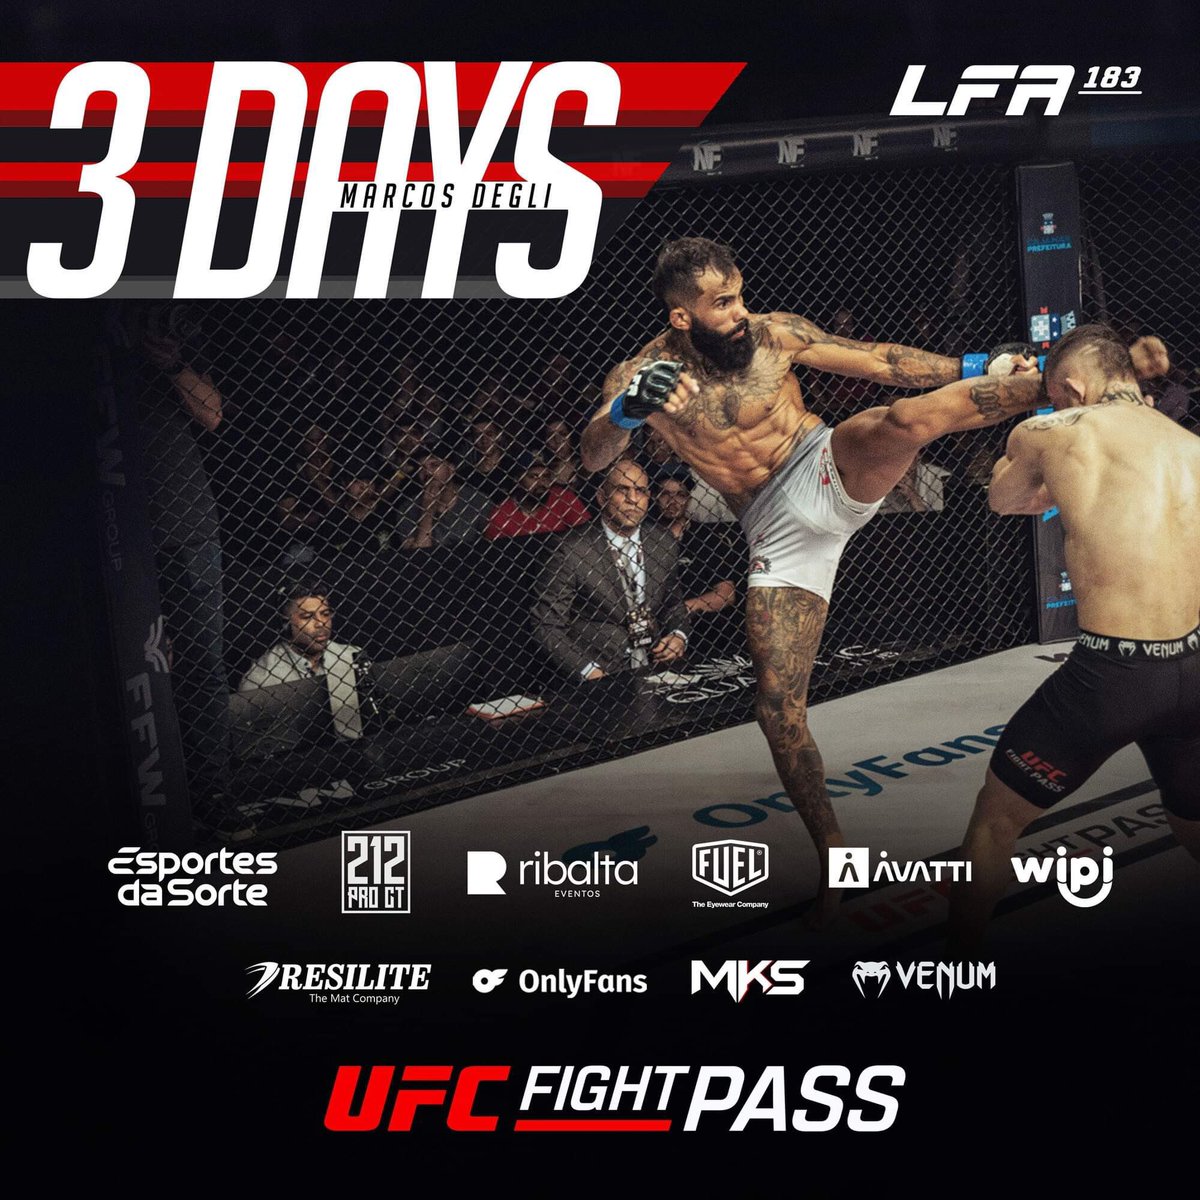 In 3 Days, fierce finisher #MarcosDegli returns to the LFA Octagon at #LFA183! 🇧🇷 Friday, May 3 @RibaltaRJ #RiodeJaneiro, #RJ, #Brazil #MMA #LFANation @UFCFightPass